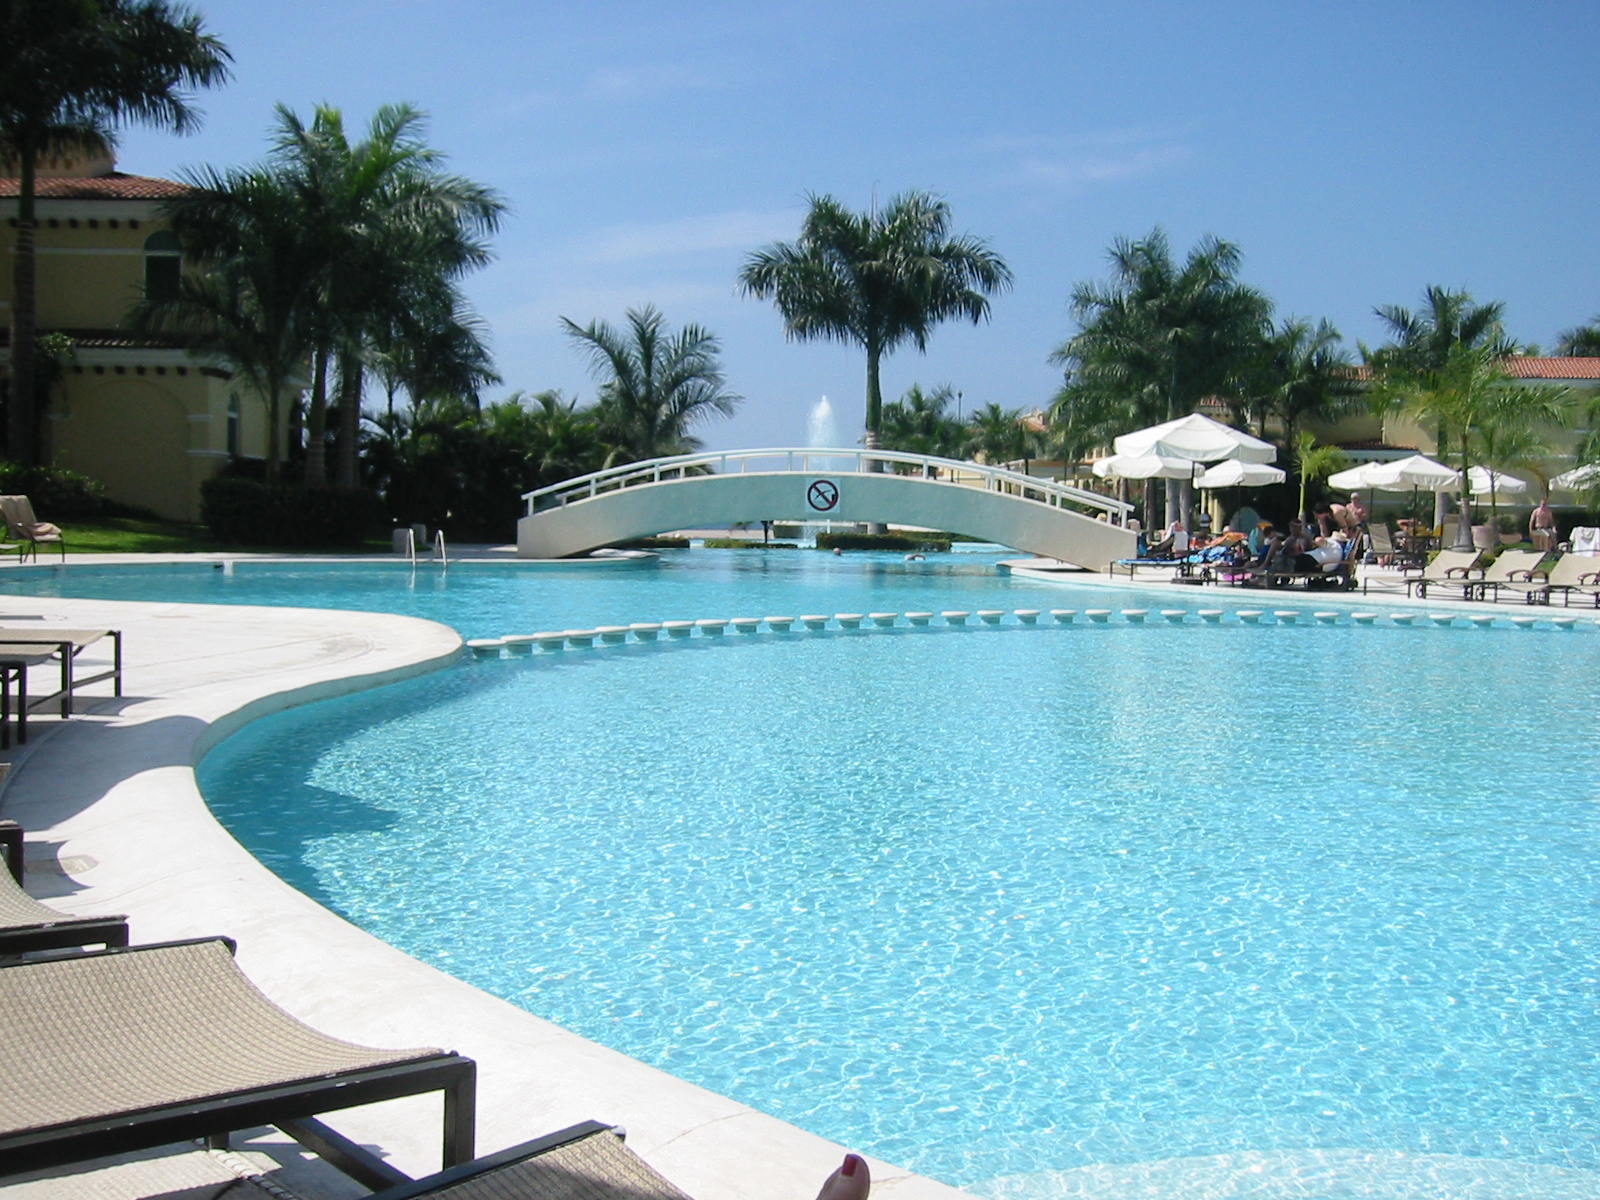 Puerto Vallarta - pool in front of our condo